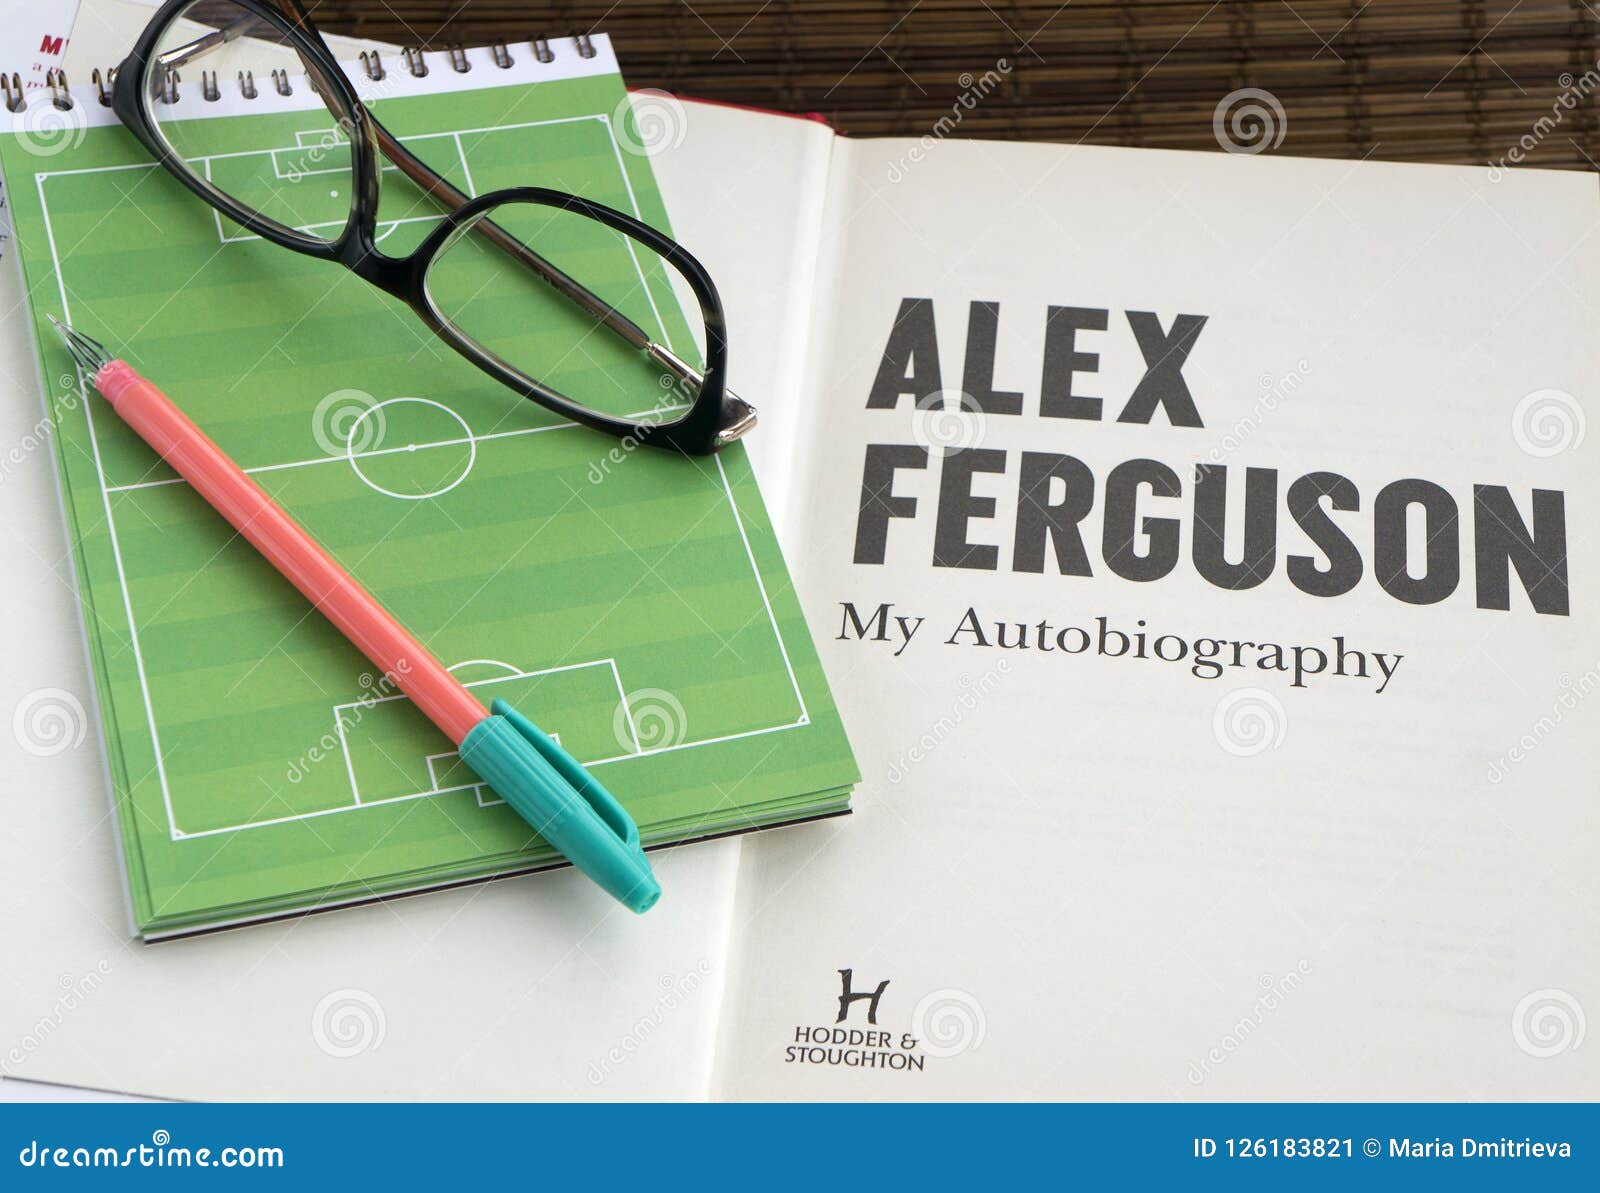 reading autobiography book by alex ferguson, a football coach. glasses